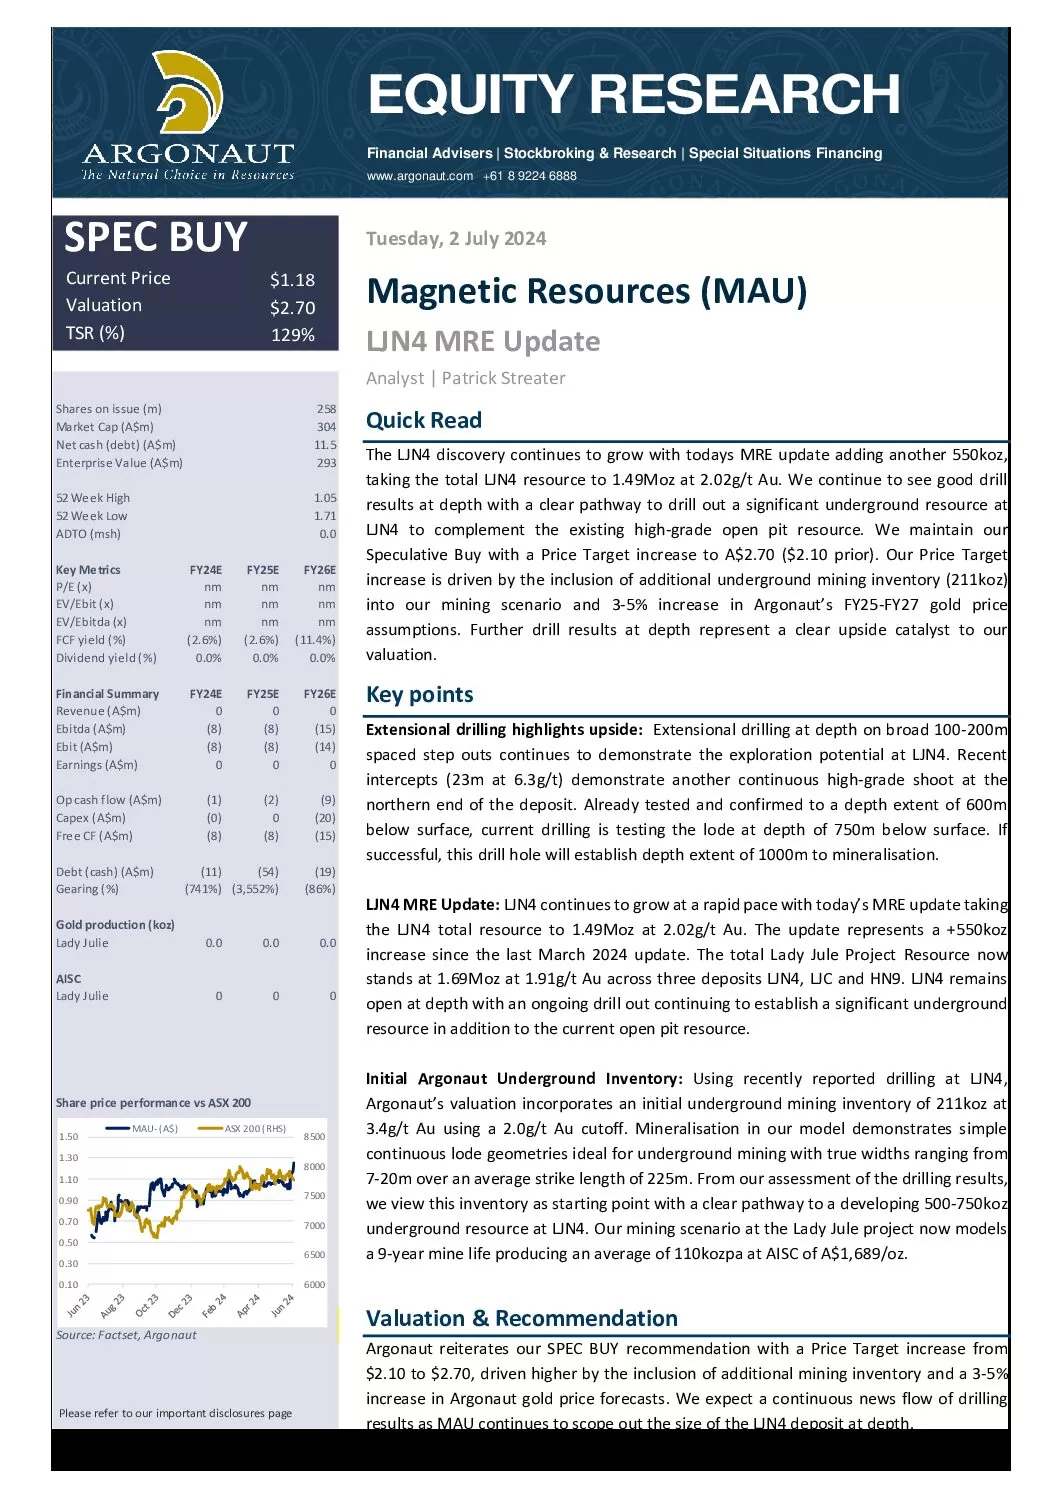 Magnetic Resources (MAU) – LJN4 MRE Update